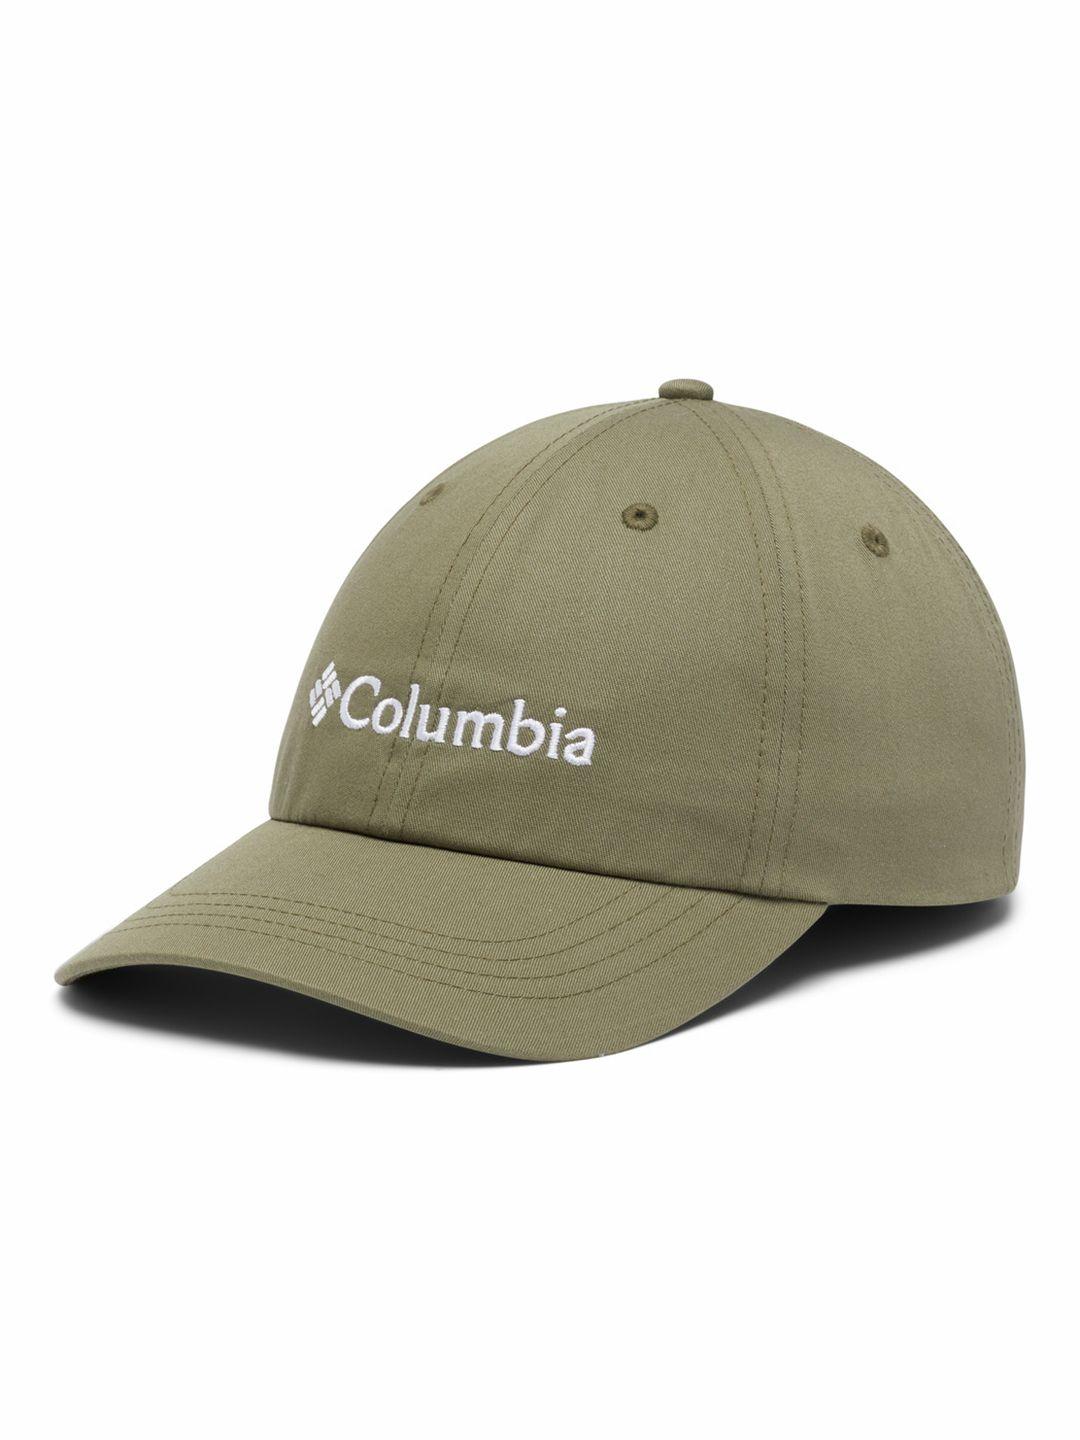 columbia unisex roc ii embroidered ball cap